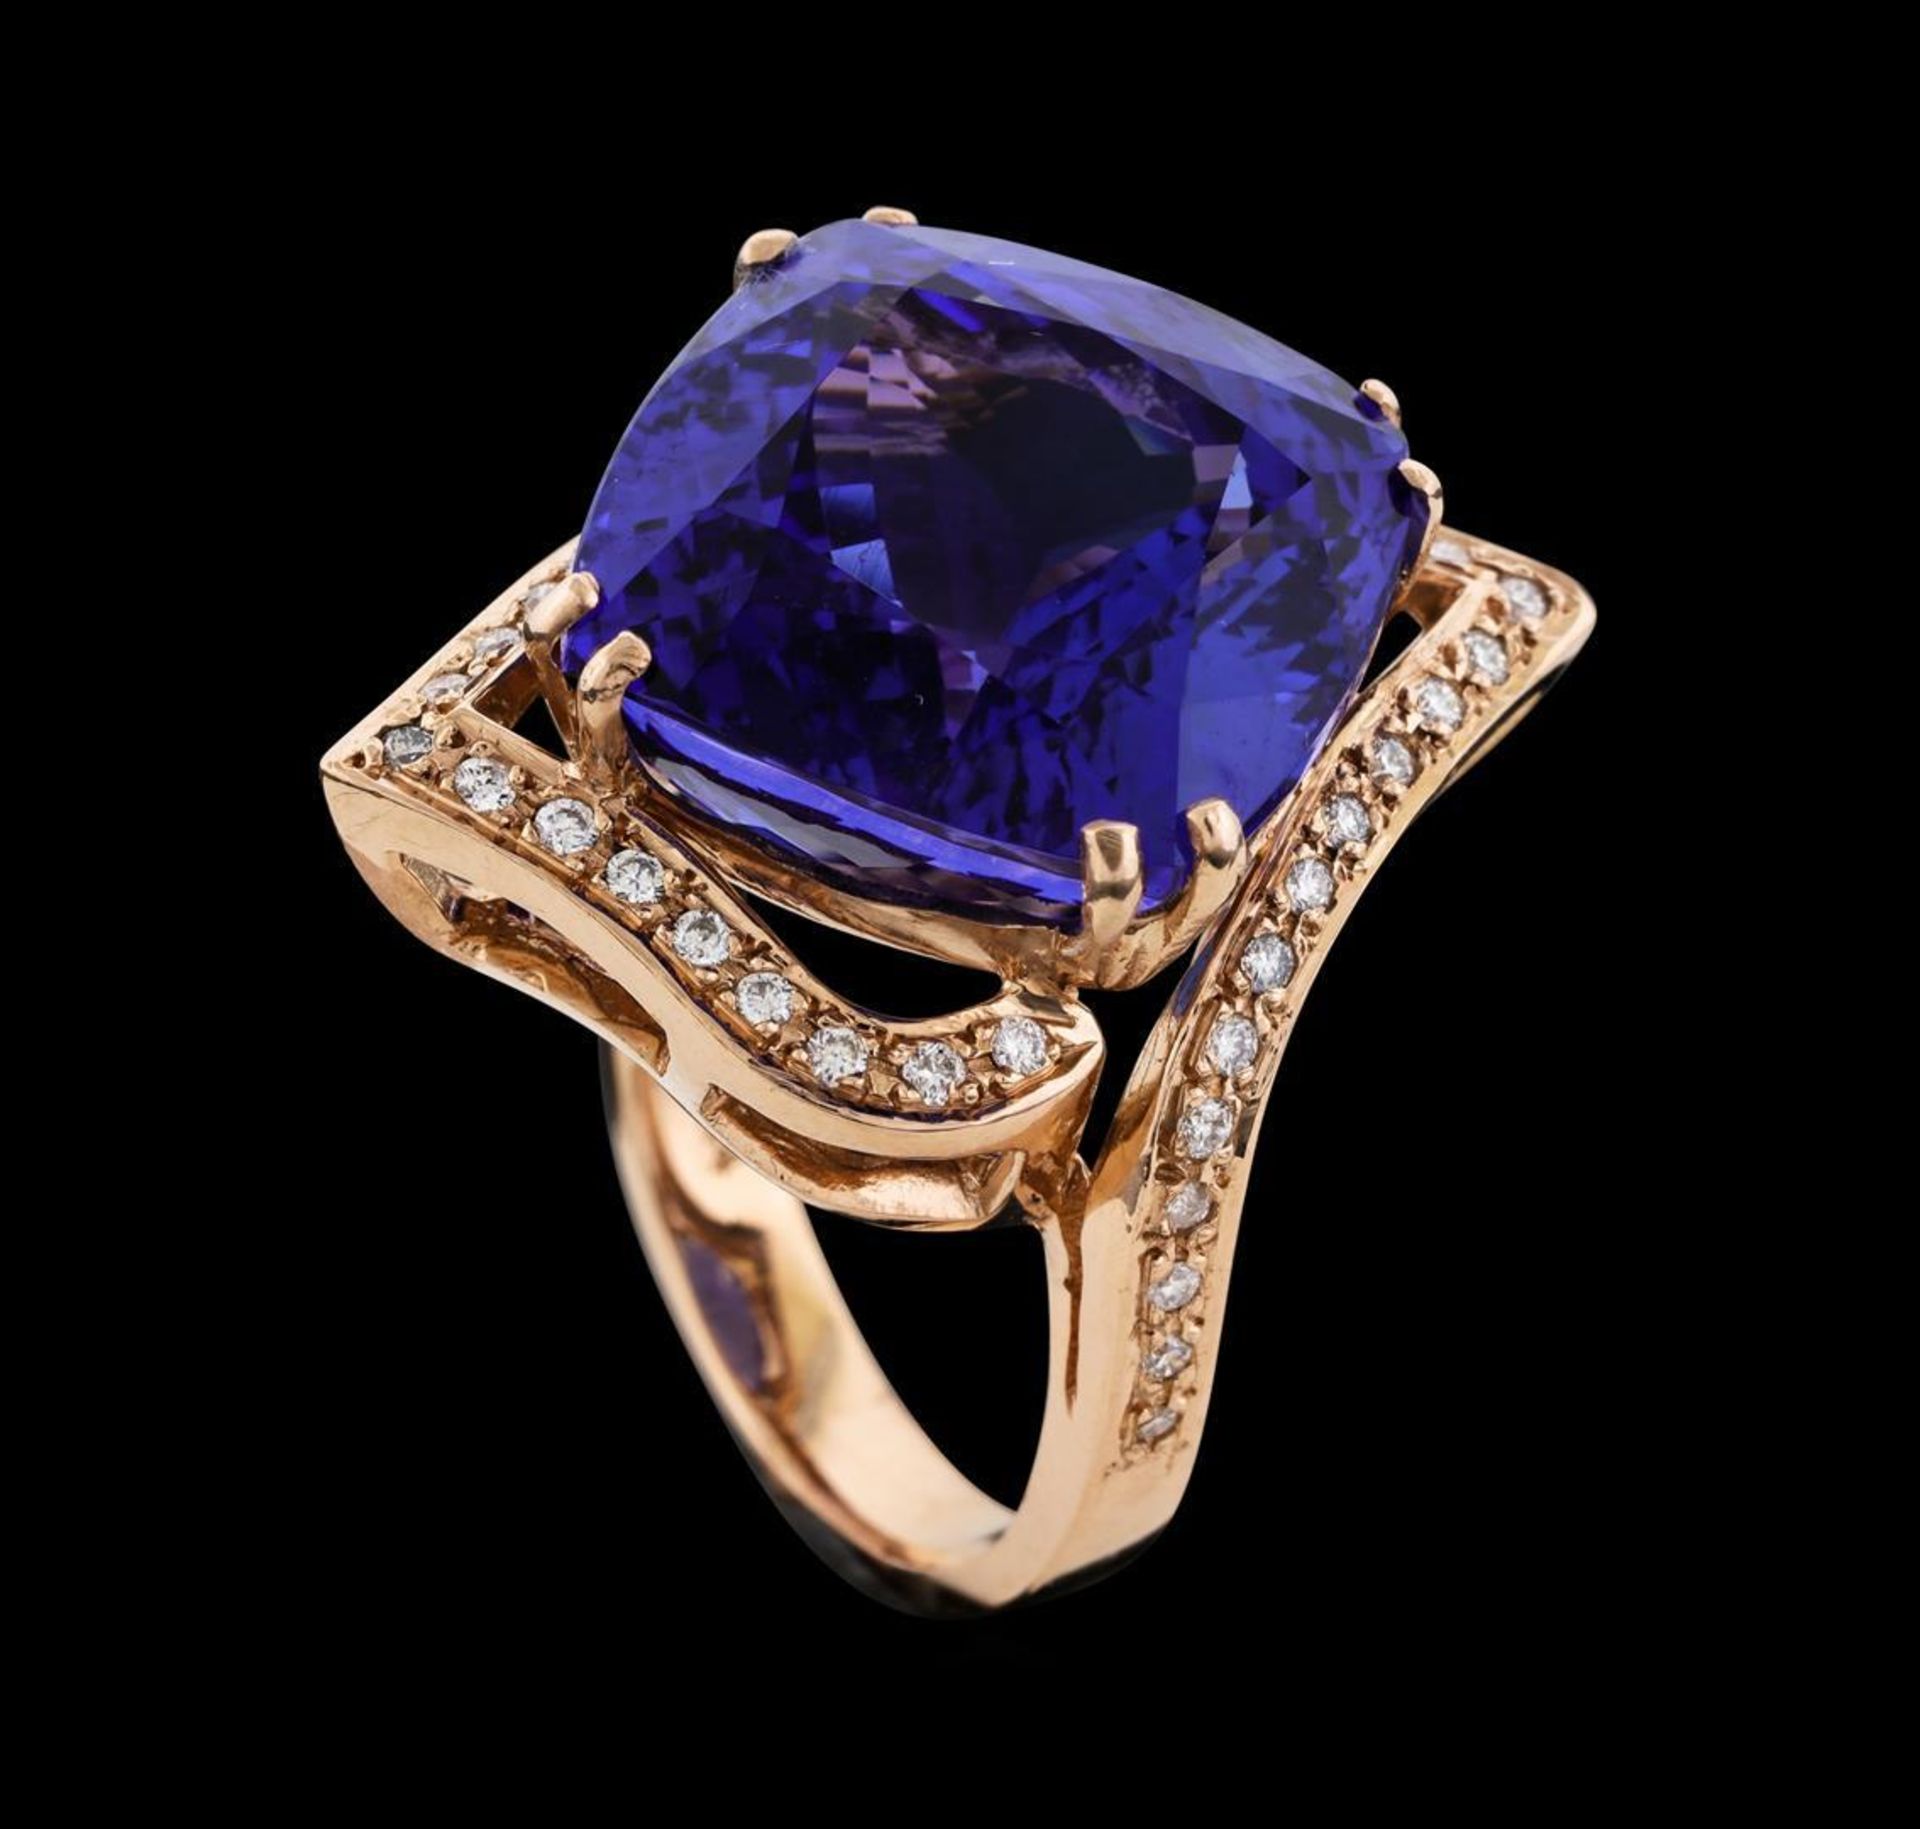 24.05 ctw Tanzanite and Diamond Ring - 14KT Rose Gold - Image 4 of 5